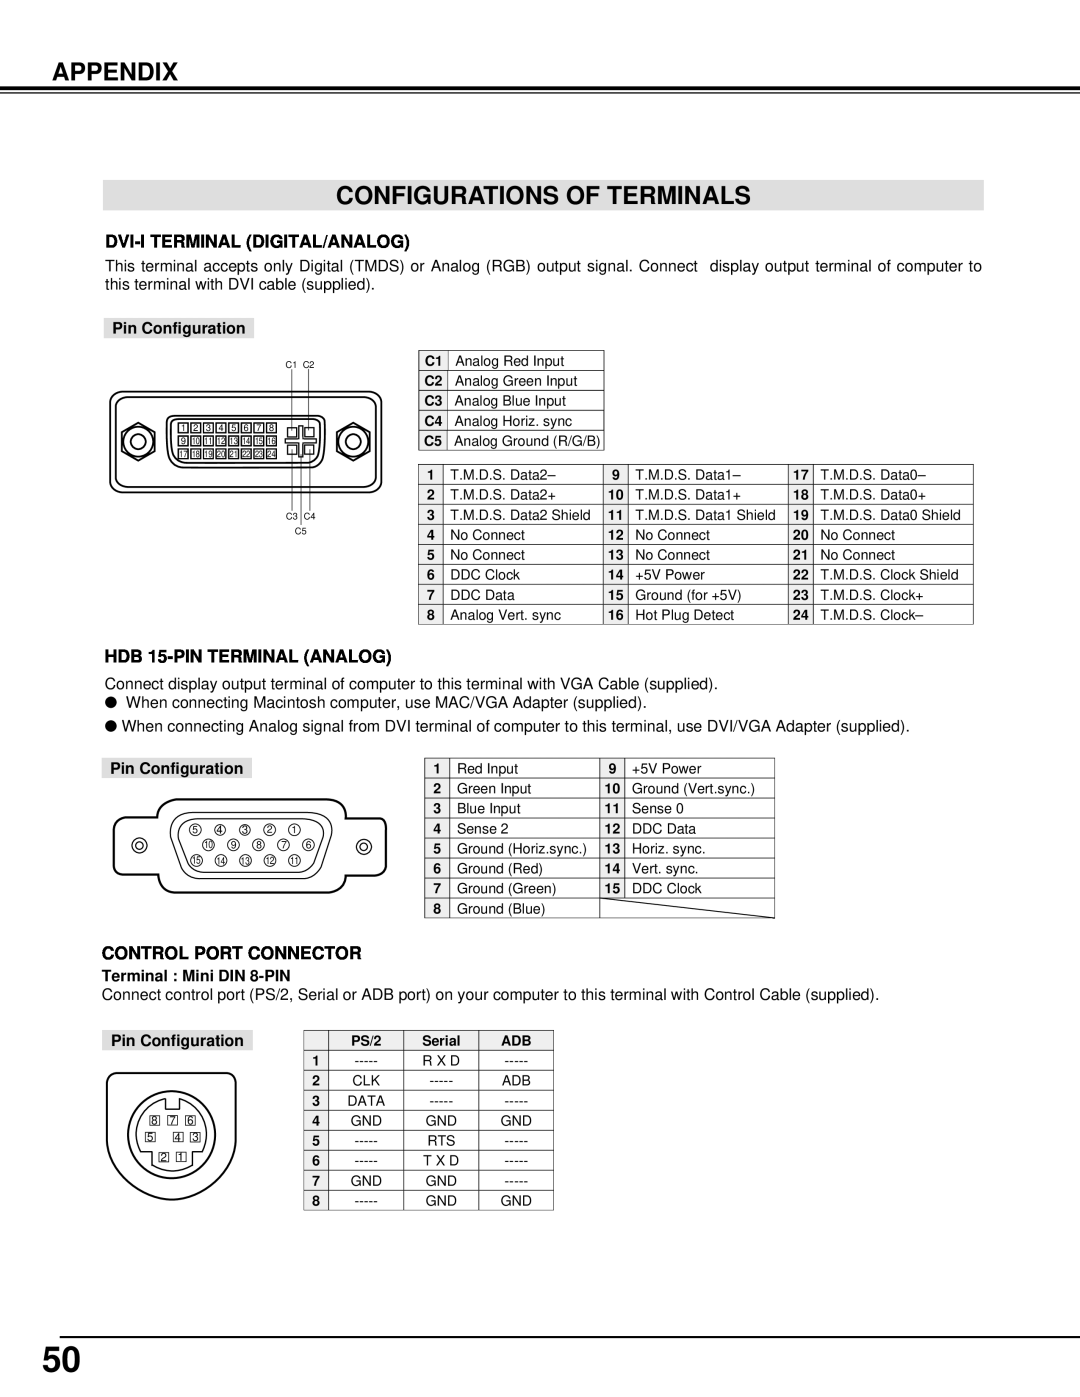 Eiki LC-XT2 Appendix Configurations Of Terminals, Dvi-Iterminal Digital/Analog, HDB 15-PINTERMINAL ANALOG 